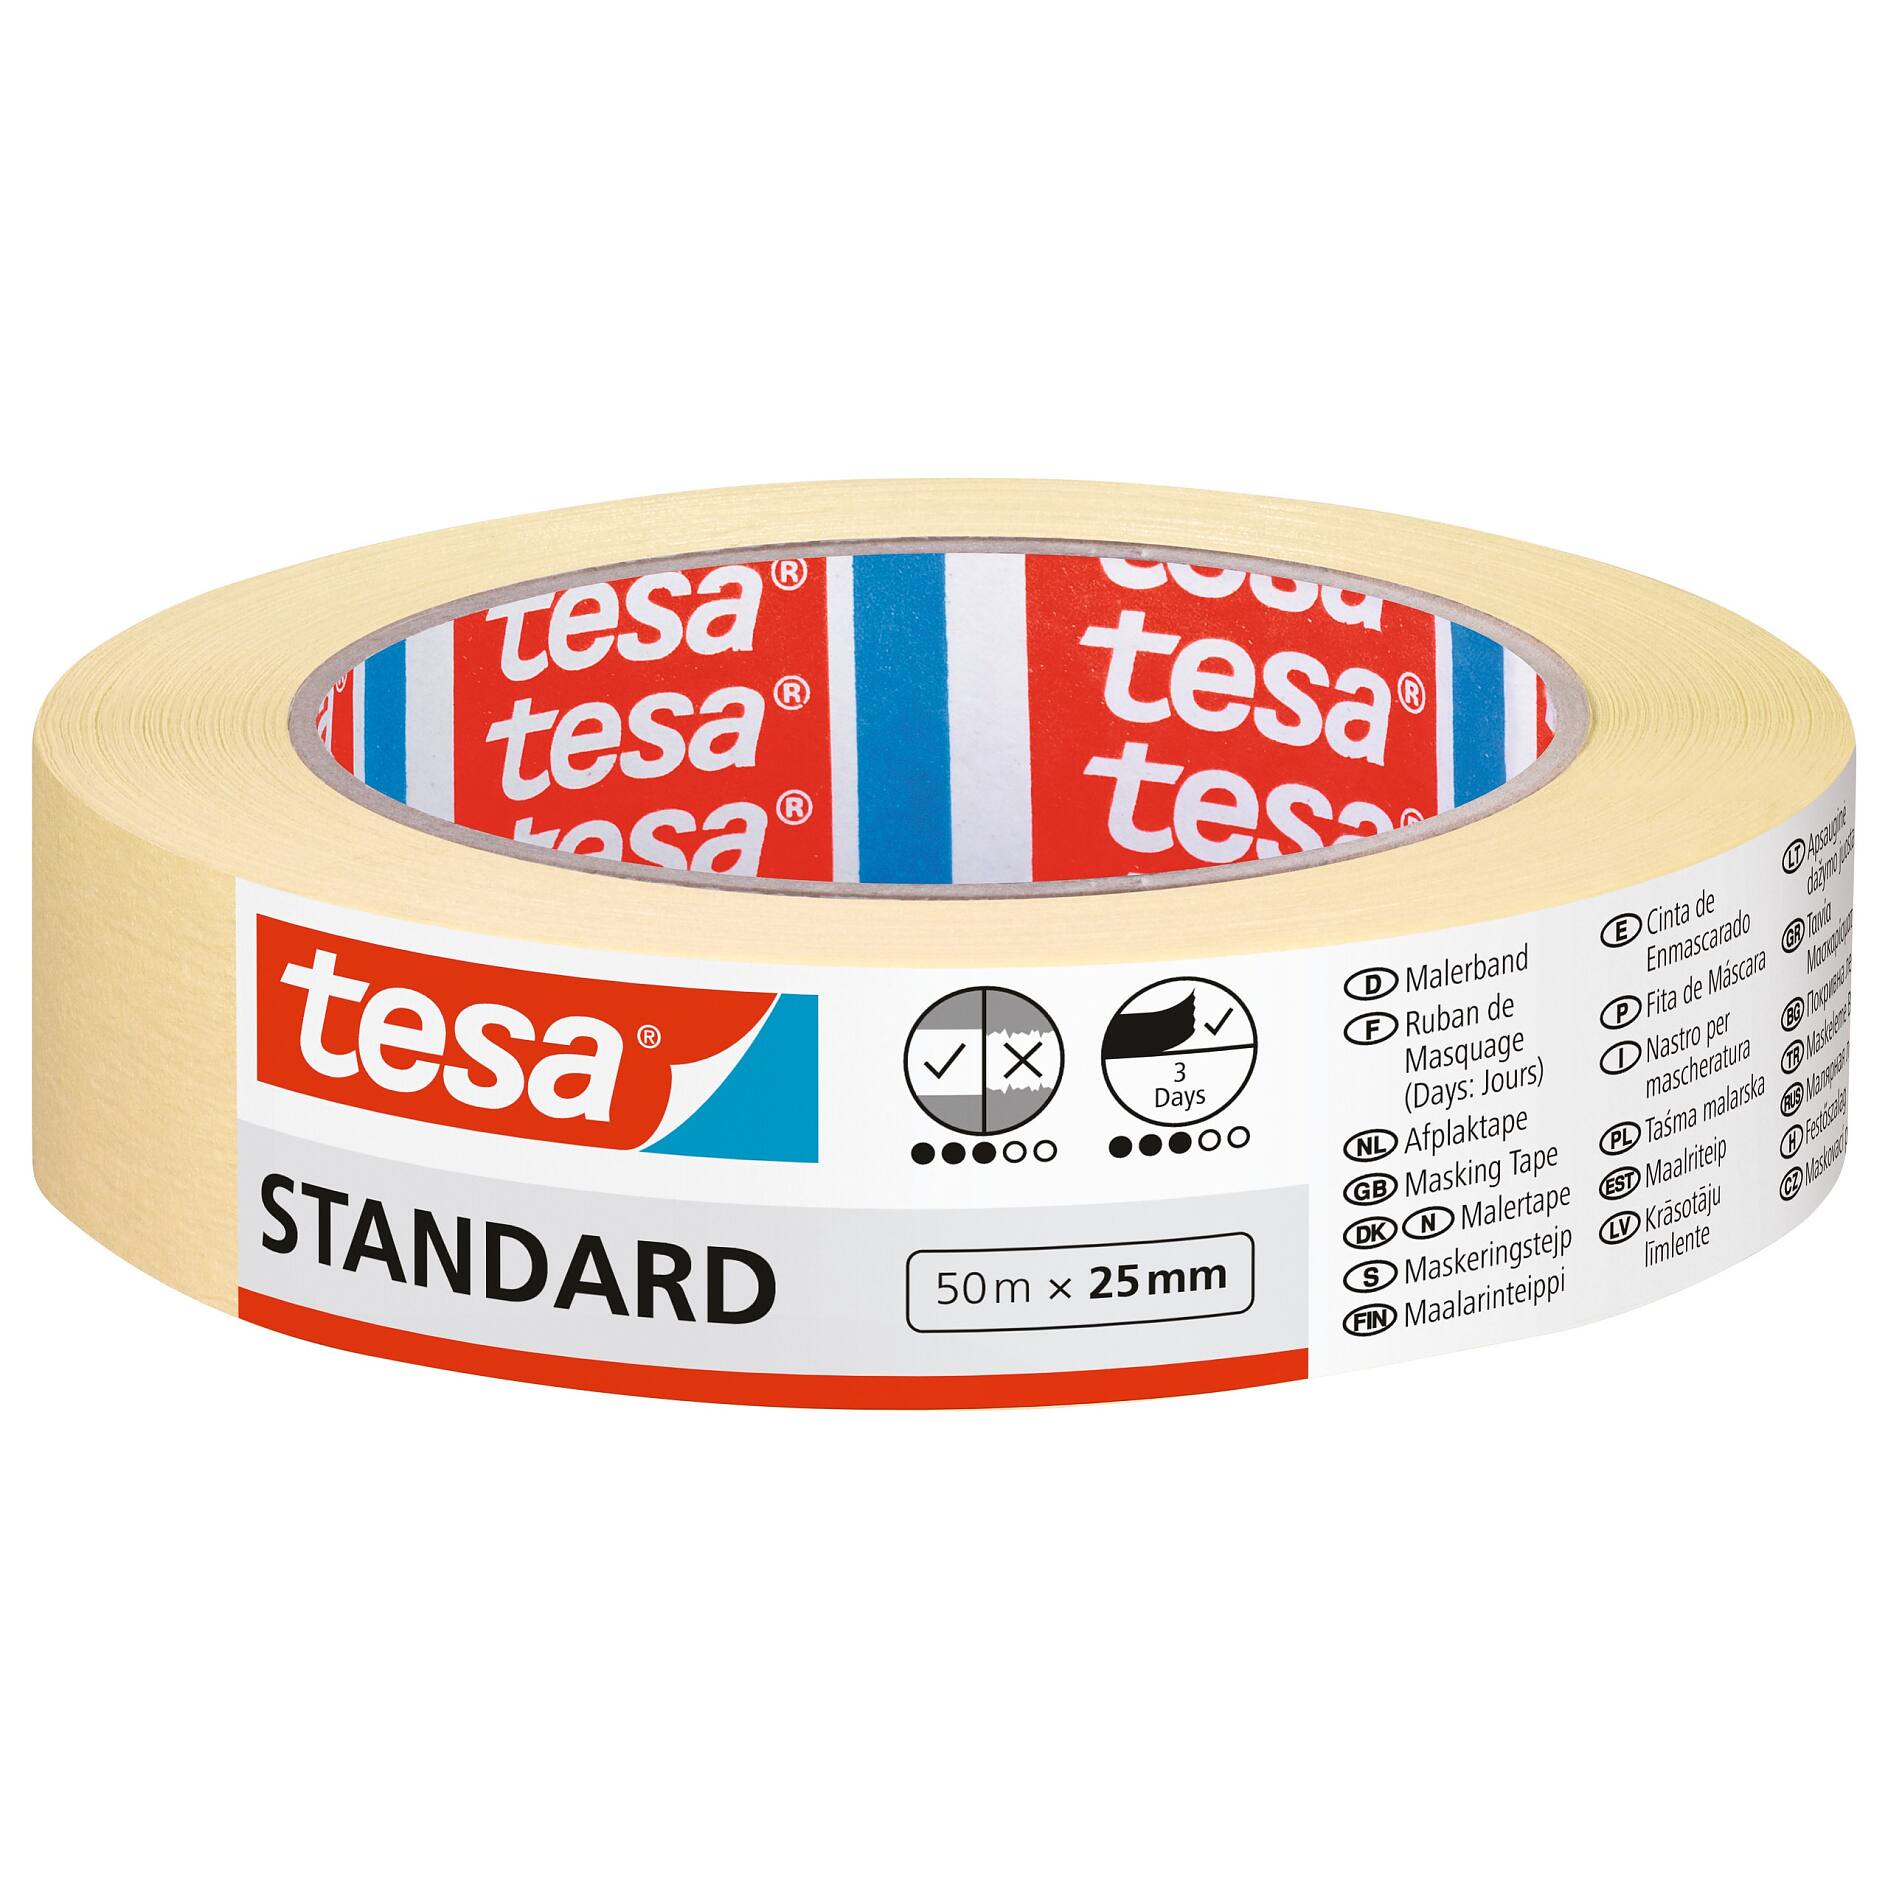 tesa® Masking Tape Excellent - tesa